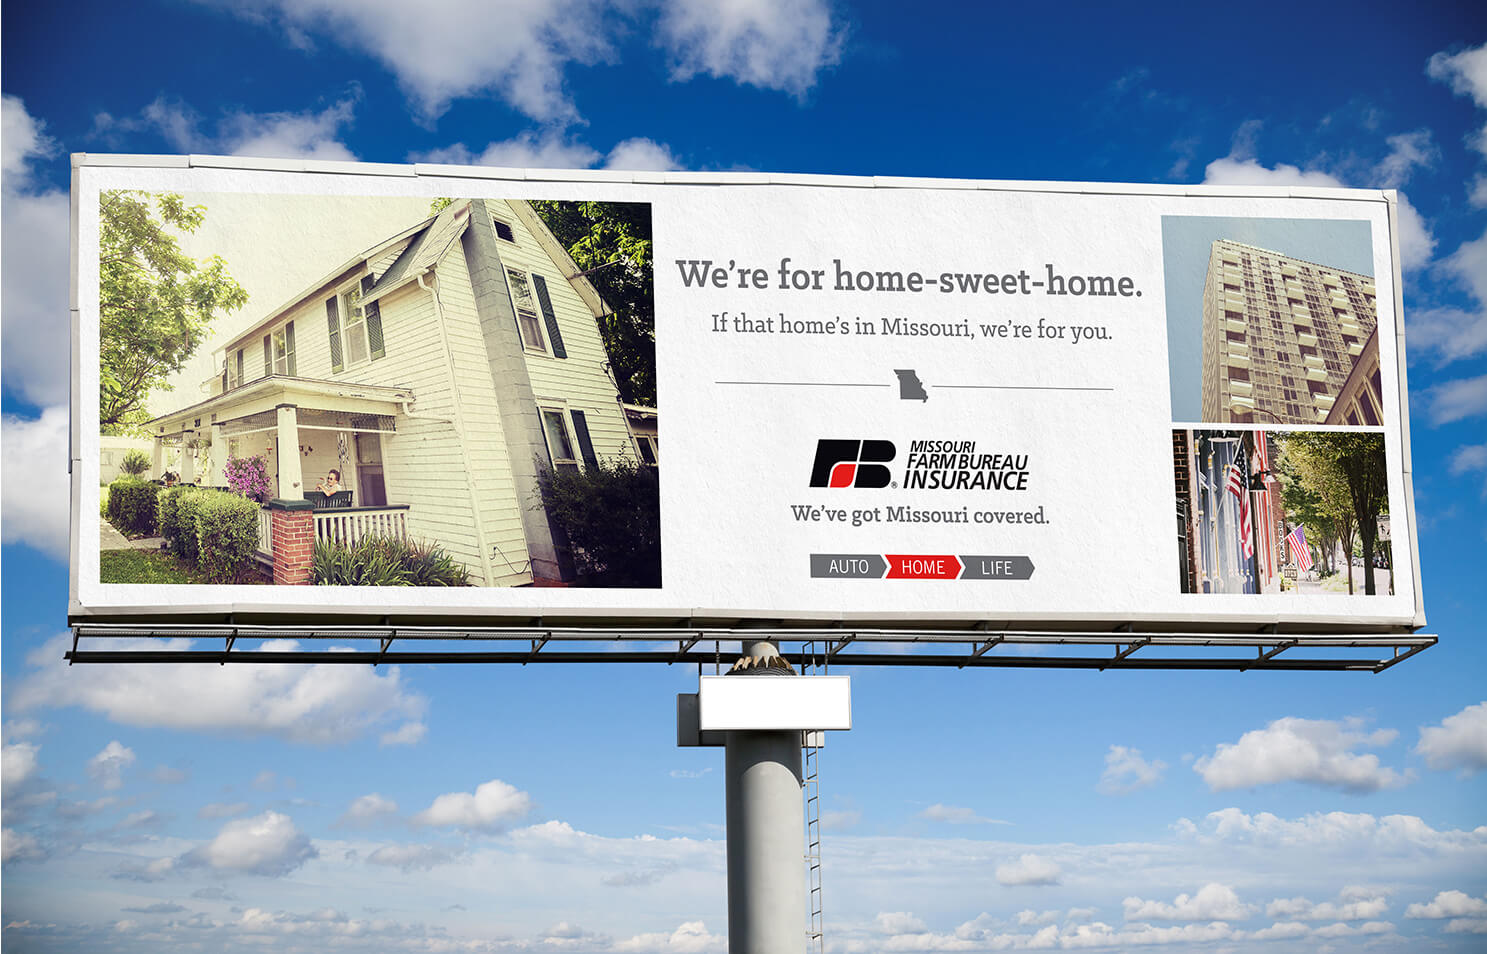 Missouri Farm Bureau Insurance large billboard ad